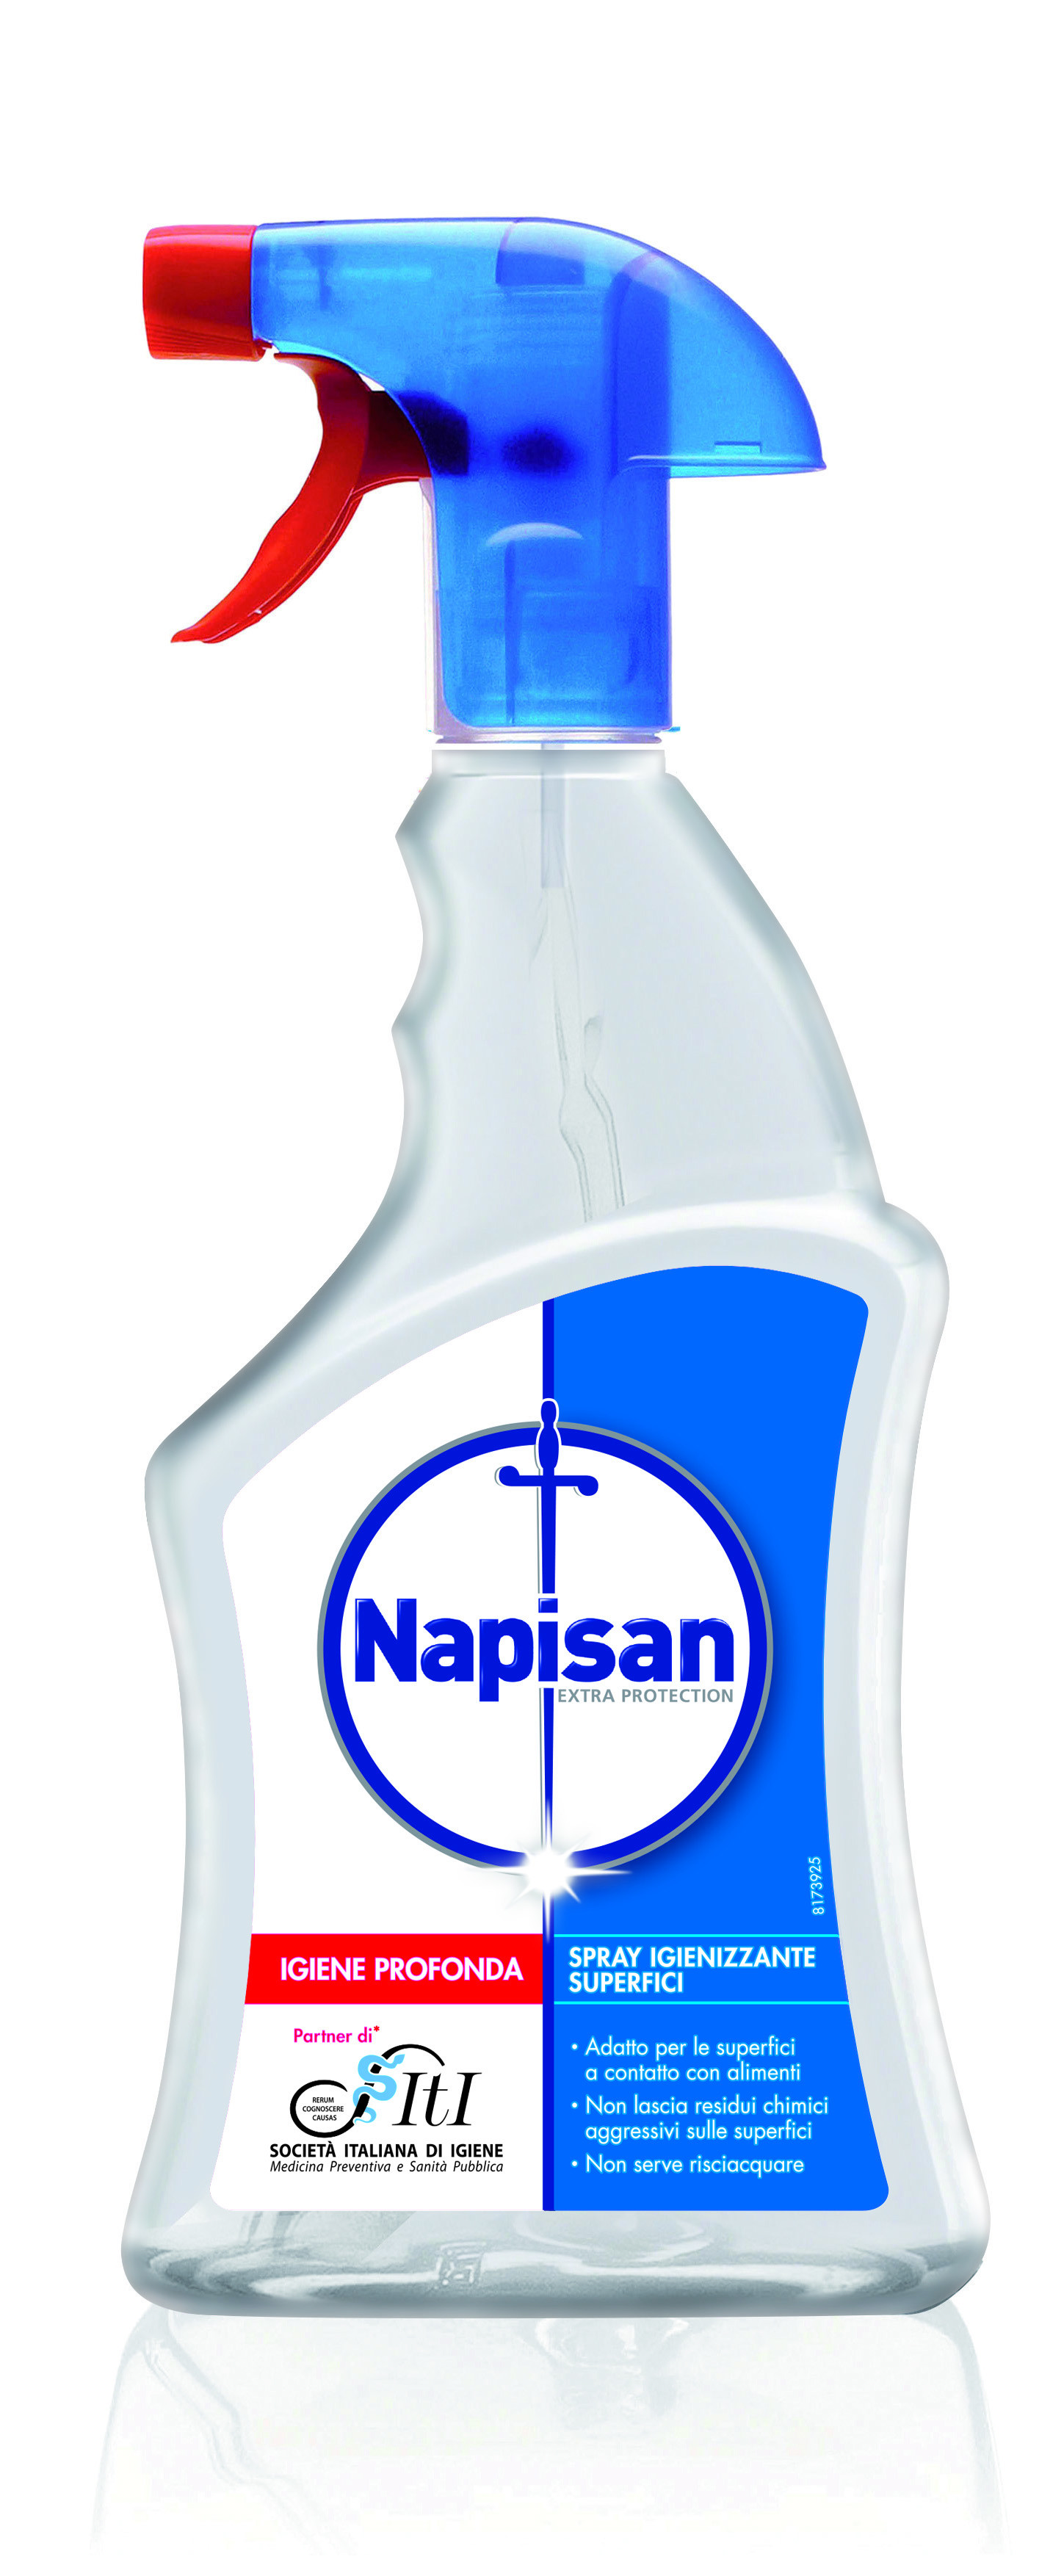 Spray Igienizzante Superfici Napisan : Recensioni – pagina 9